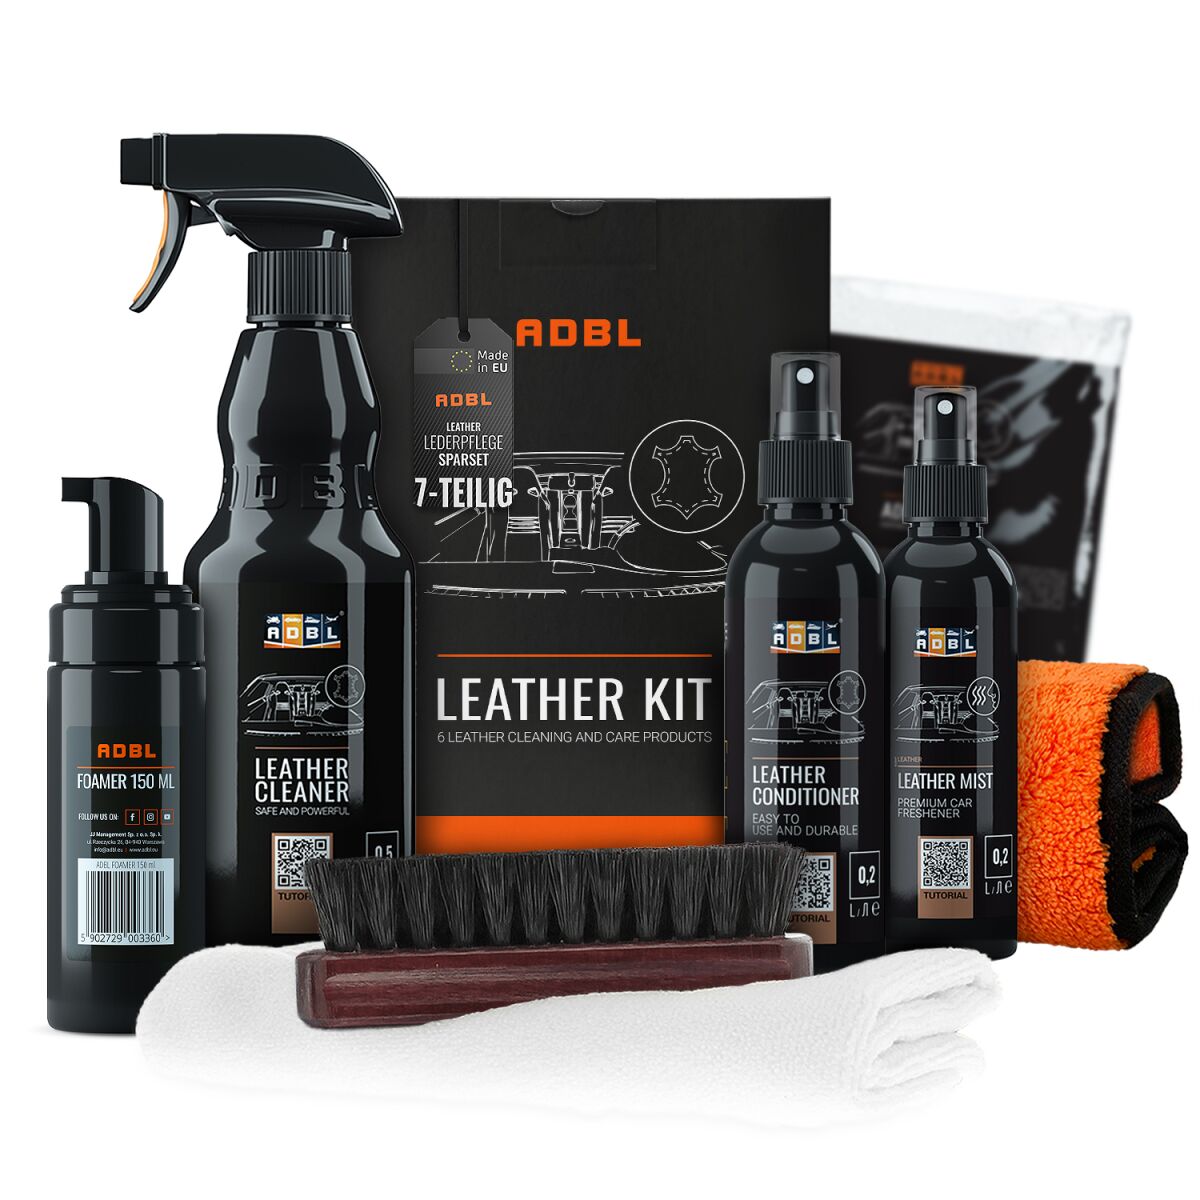 ADBL Leather Kit Lederpflegeset | waschguru Autopflege, 29,90 €